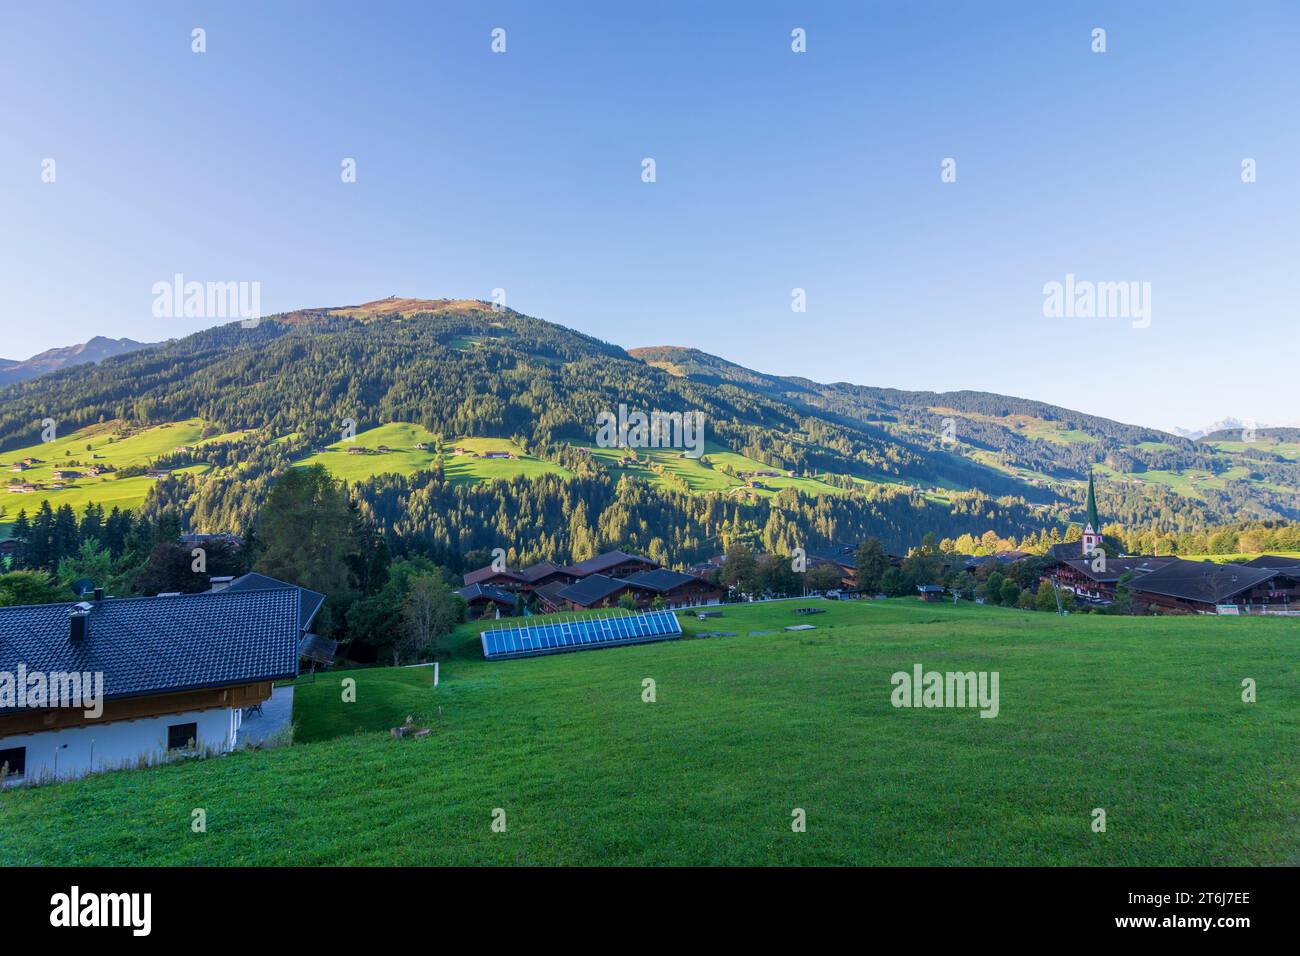 Alpbach, village Alpbach, church in Alpbachtal, Tyrol, Austria Stock Photo